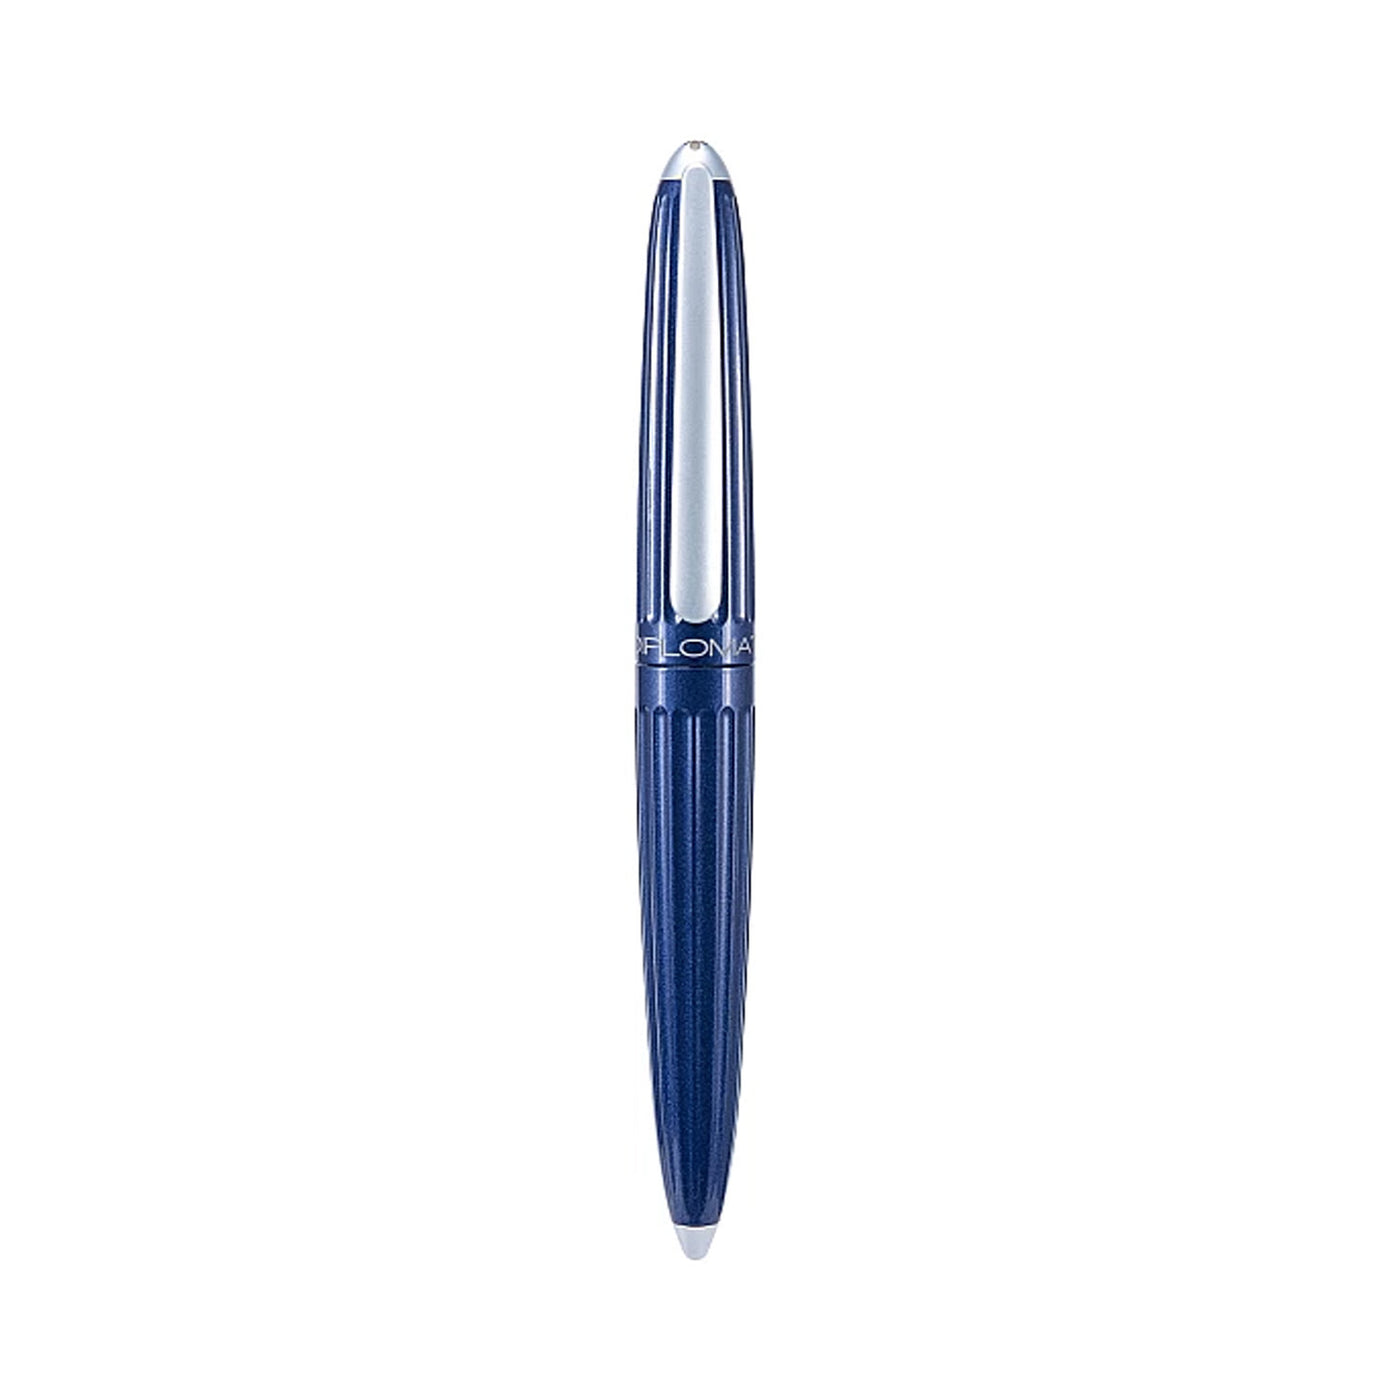 Diplomat Aero Roller Ball Pen - Midnight Blue 3